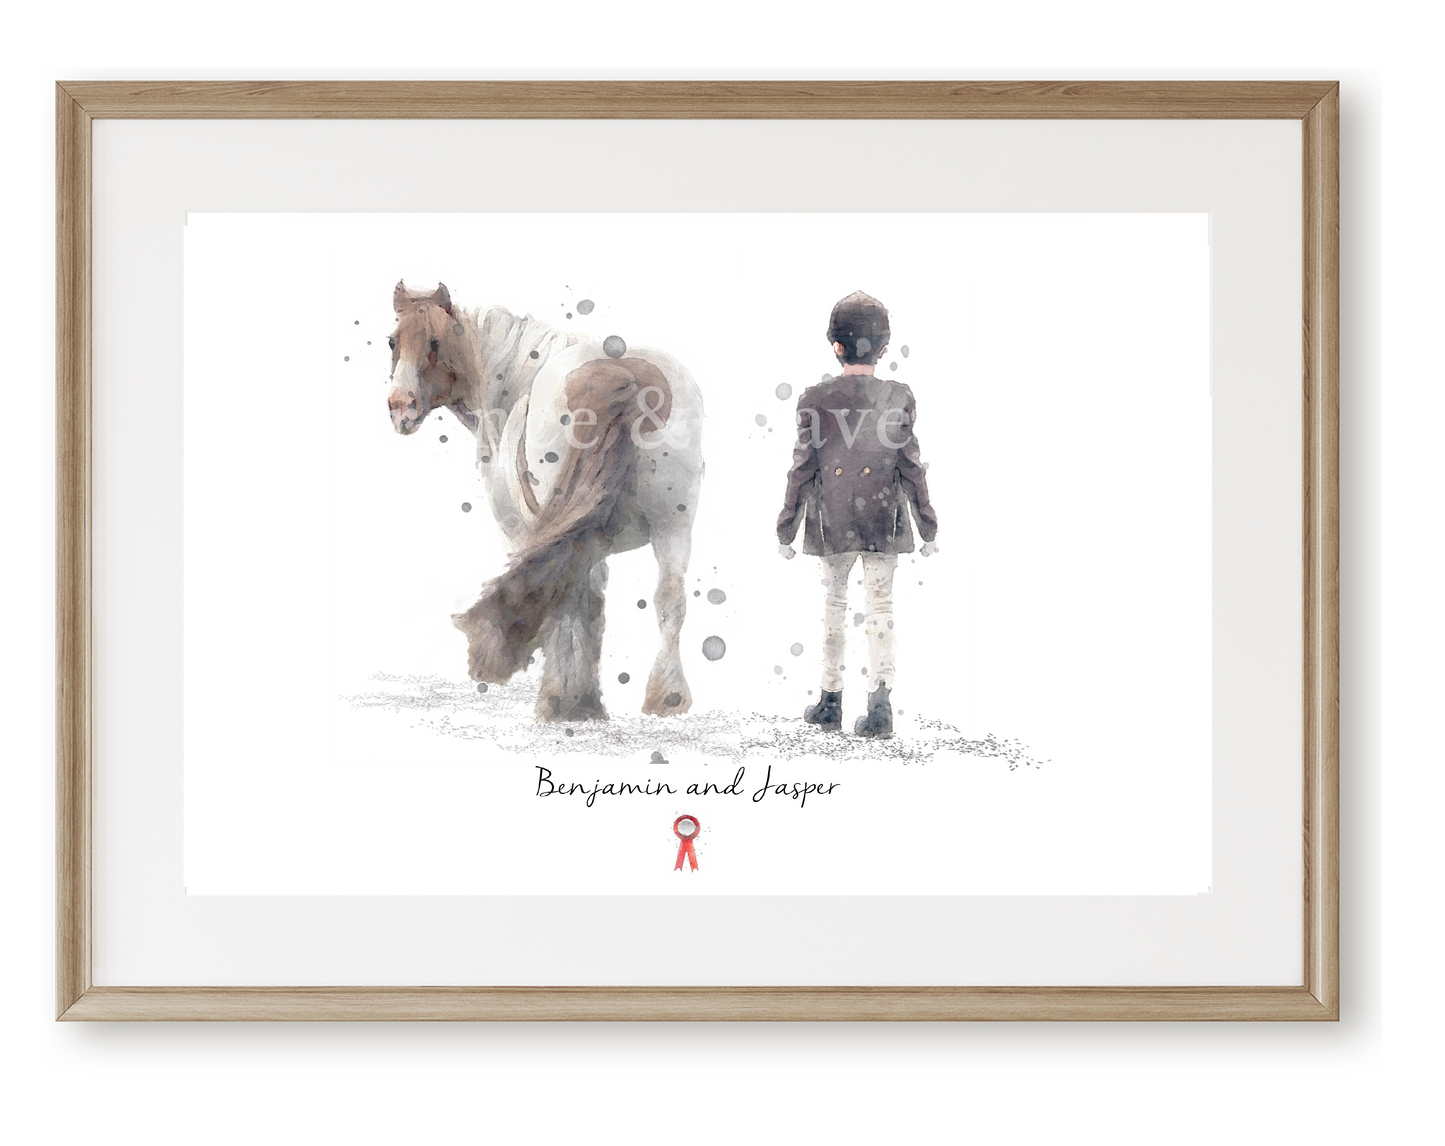 Personalised Child & Pony Print - Florence & Lavender